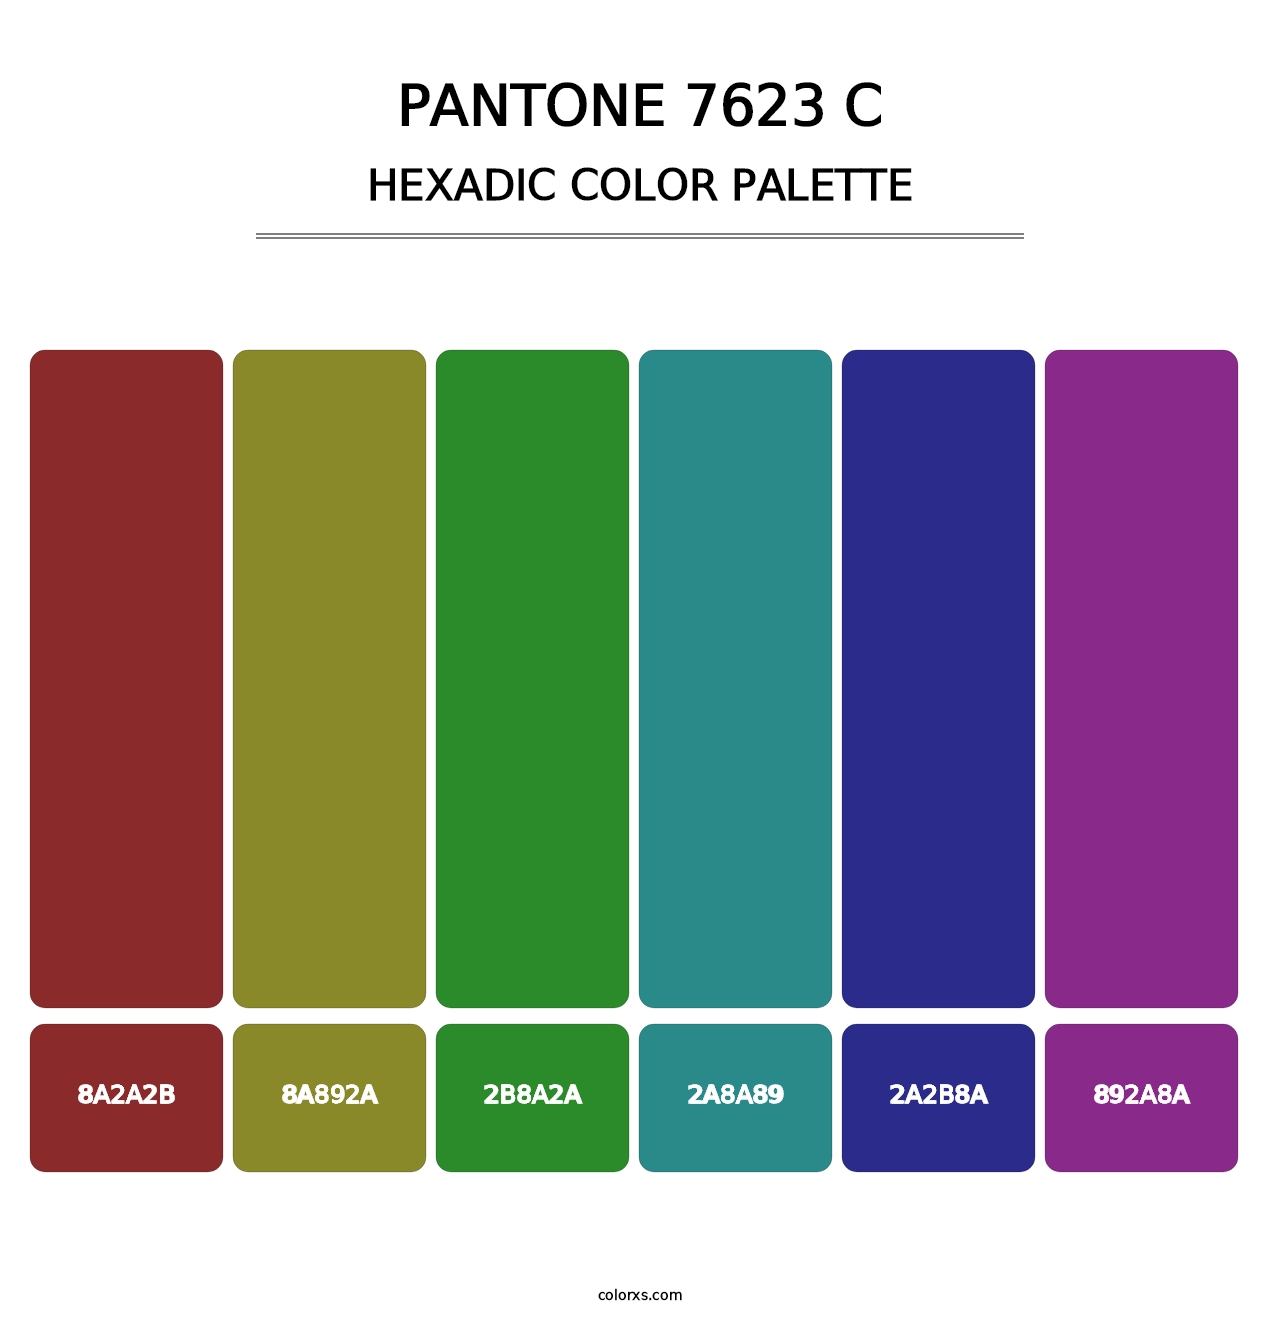 PANTONE 7623 C - Hexadic Color Palette